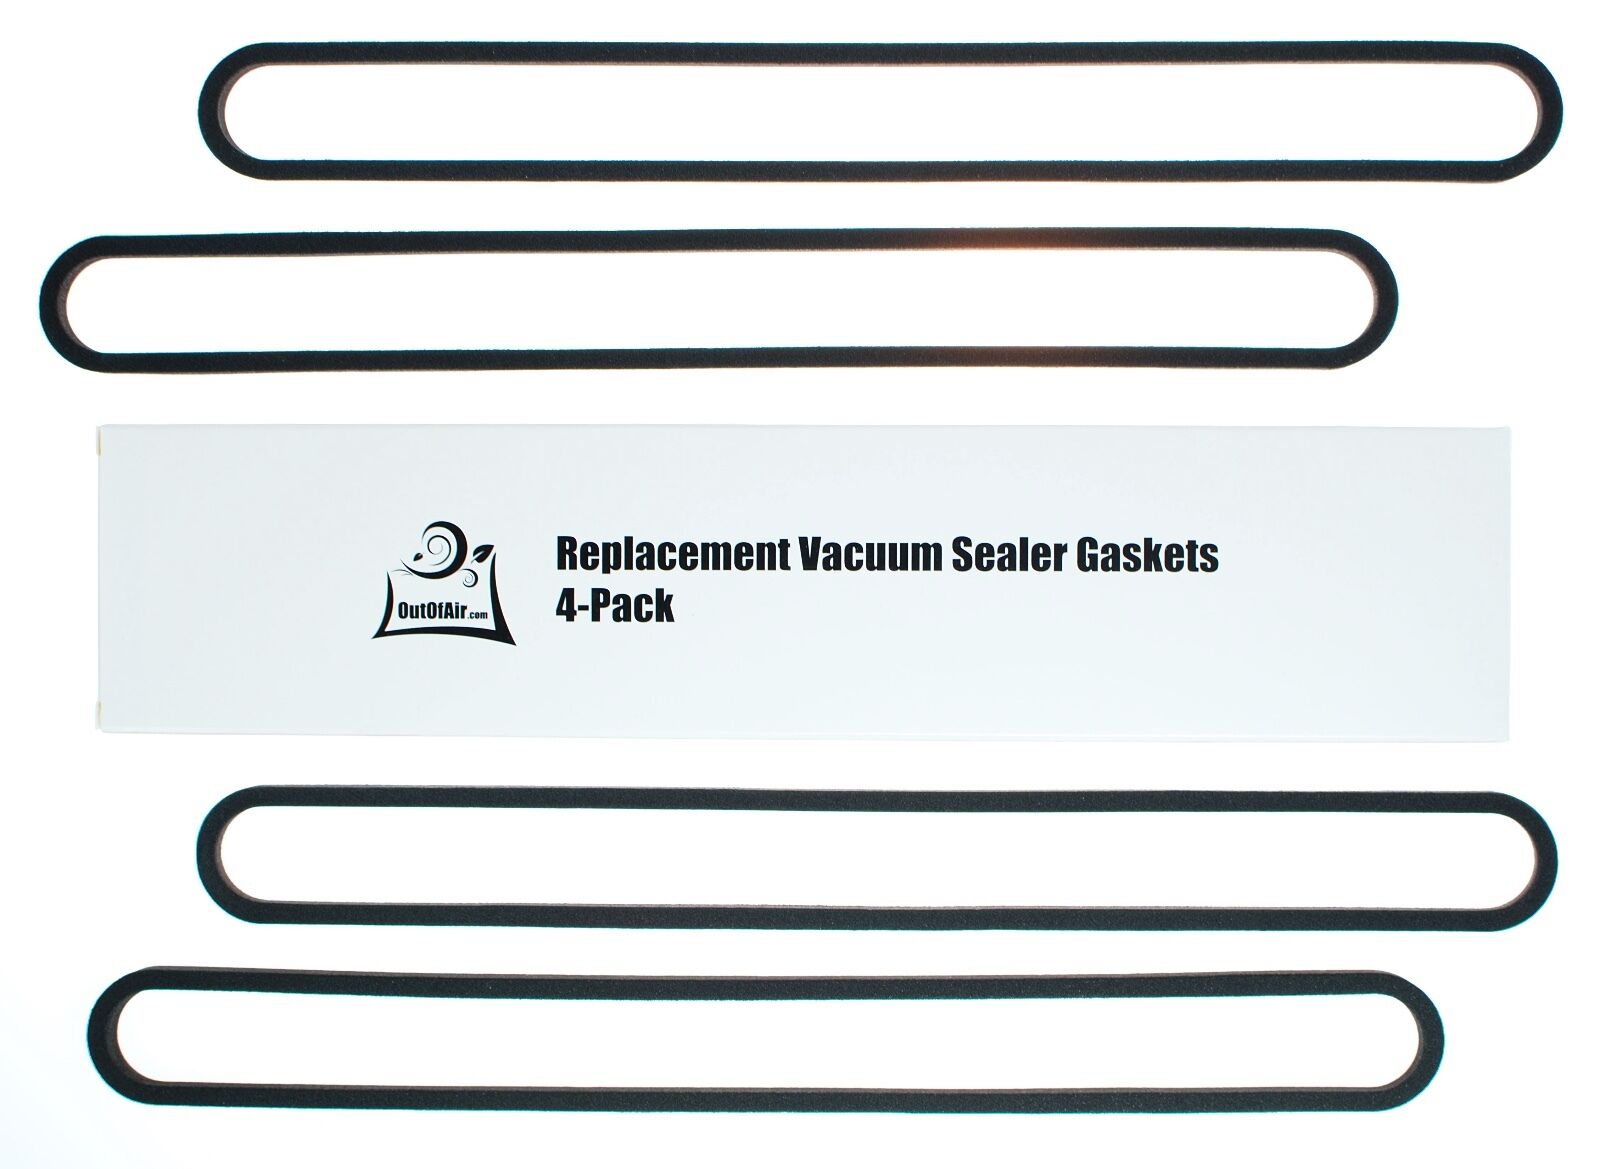 Foodsaver Upper & Lower Gasket Assembly Replacements - 4 Foam Sealer Gaskets